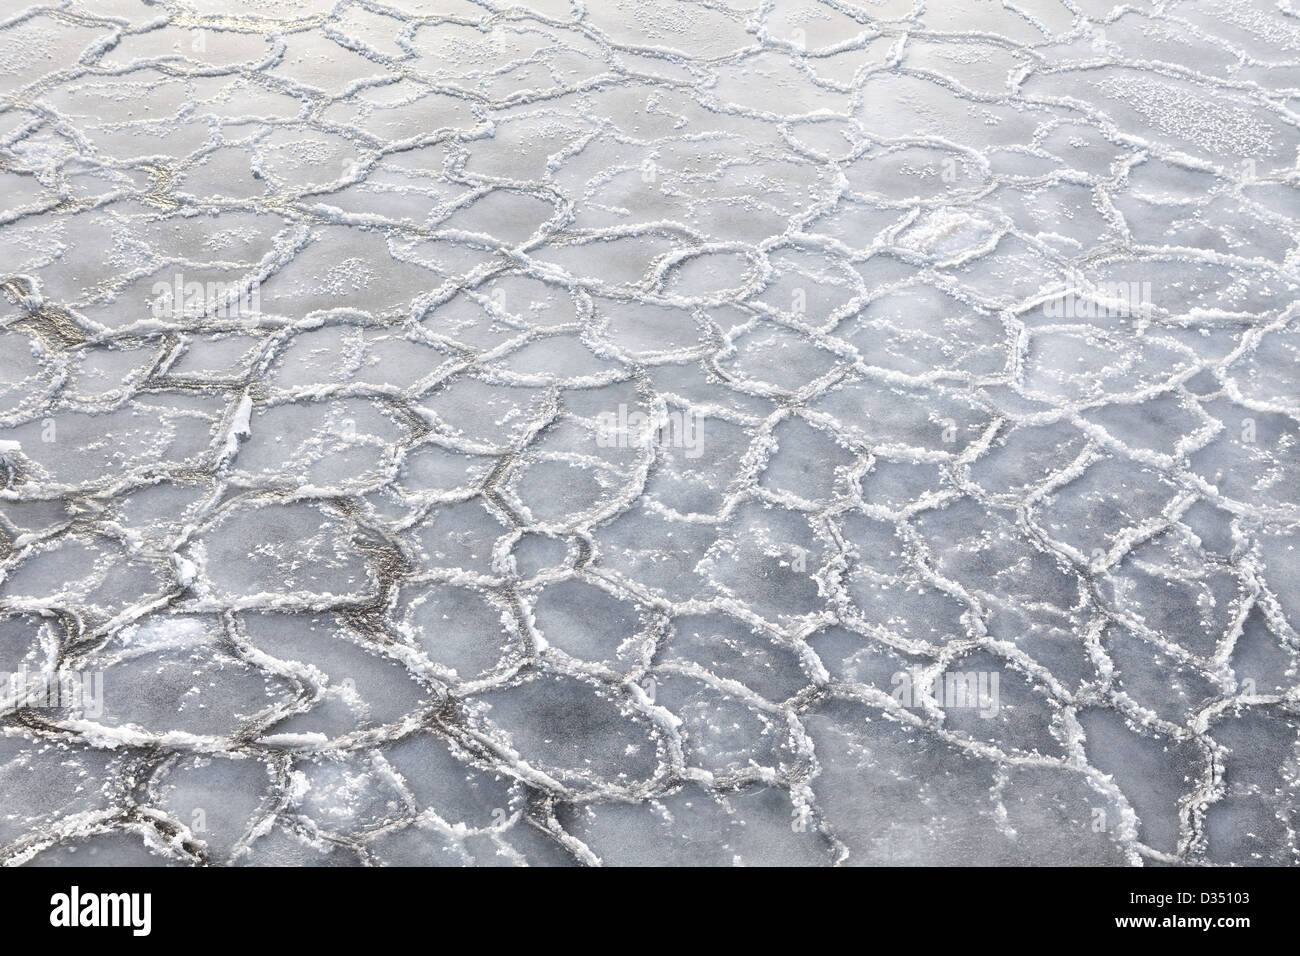 Fozen water surface on the frozen lake Stock Photo